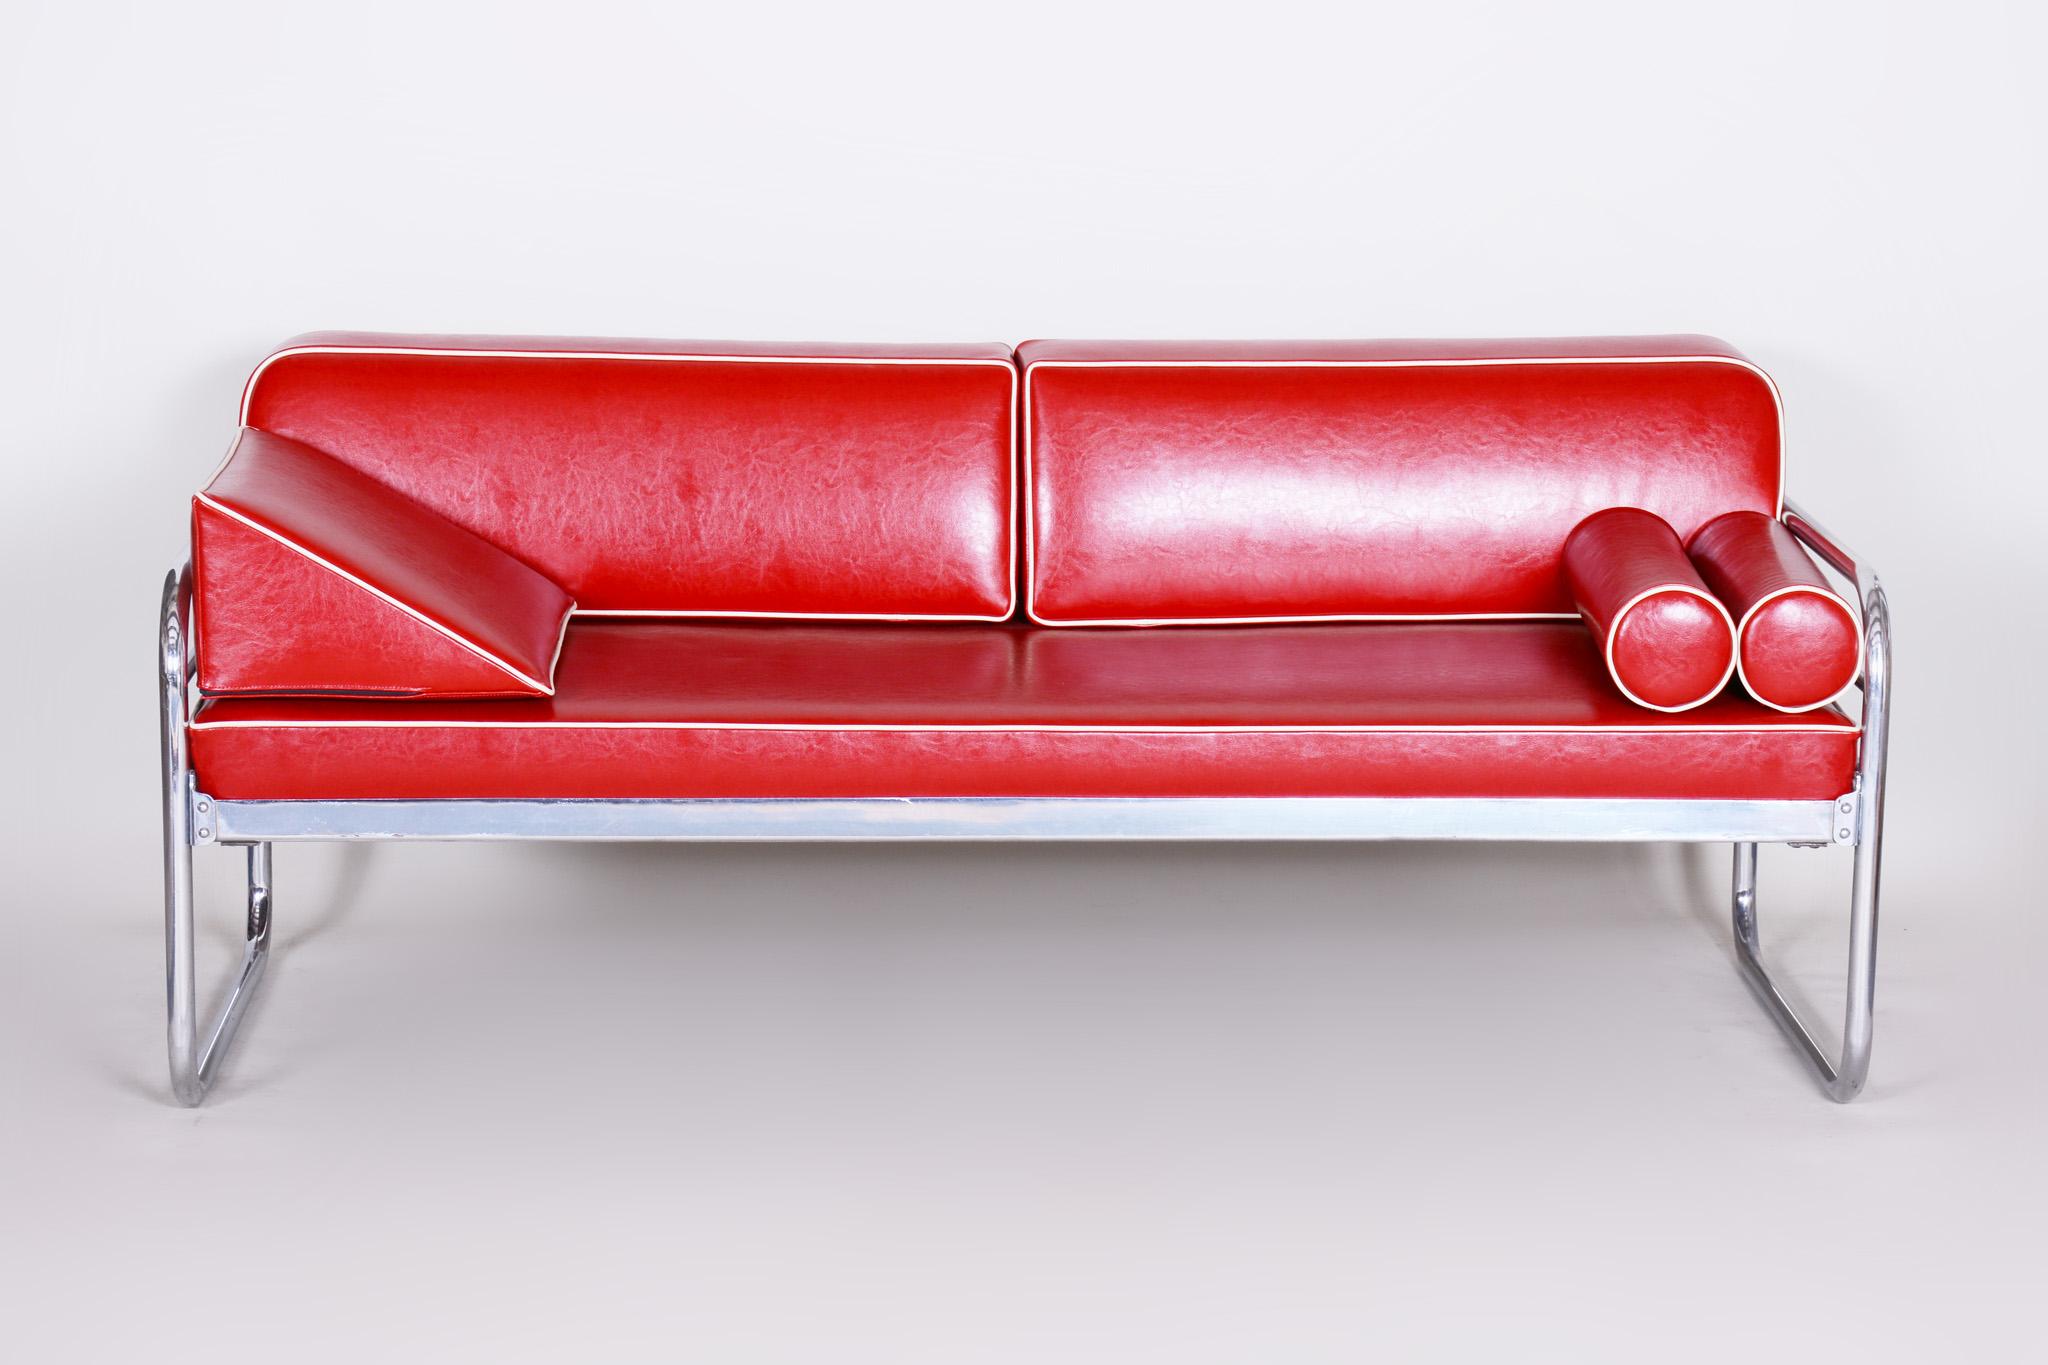 Tschechisches Bauhaus-Sofa aus Chromrotem röhrenförmigem Chrom von Hynek Gottwald, neu gepolstert, 1930er Jahre (Leder) im Angebot